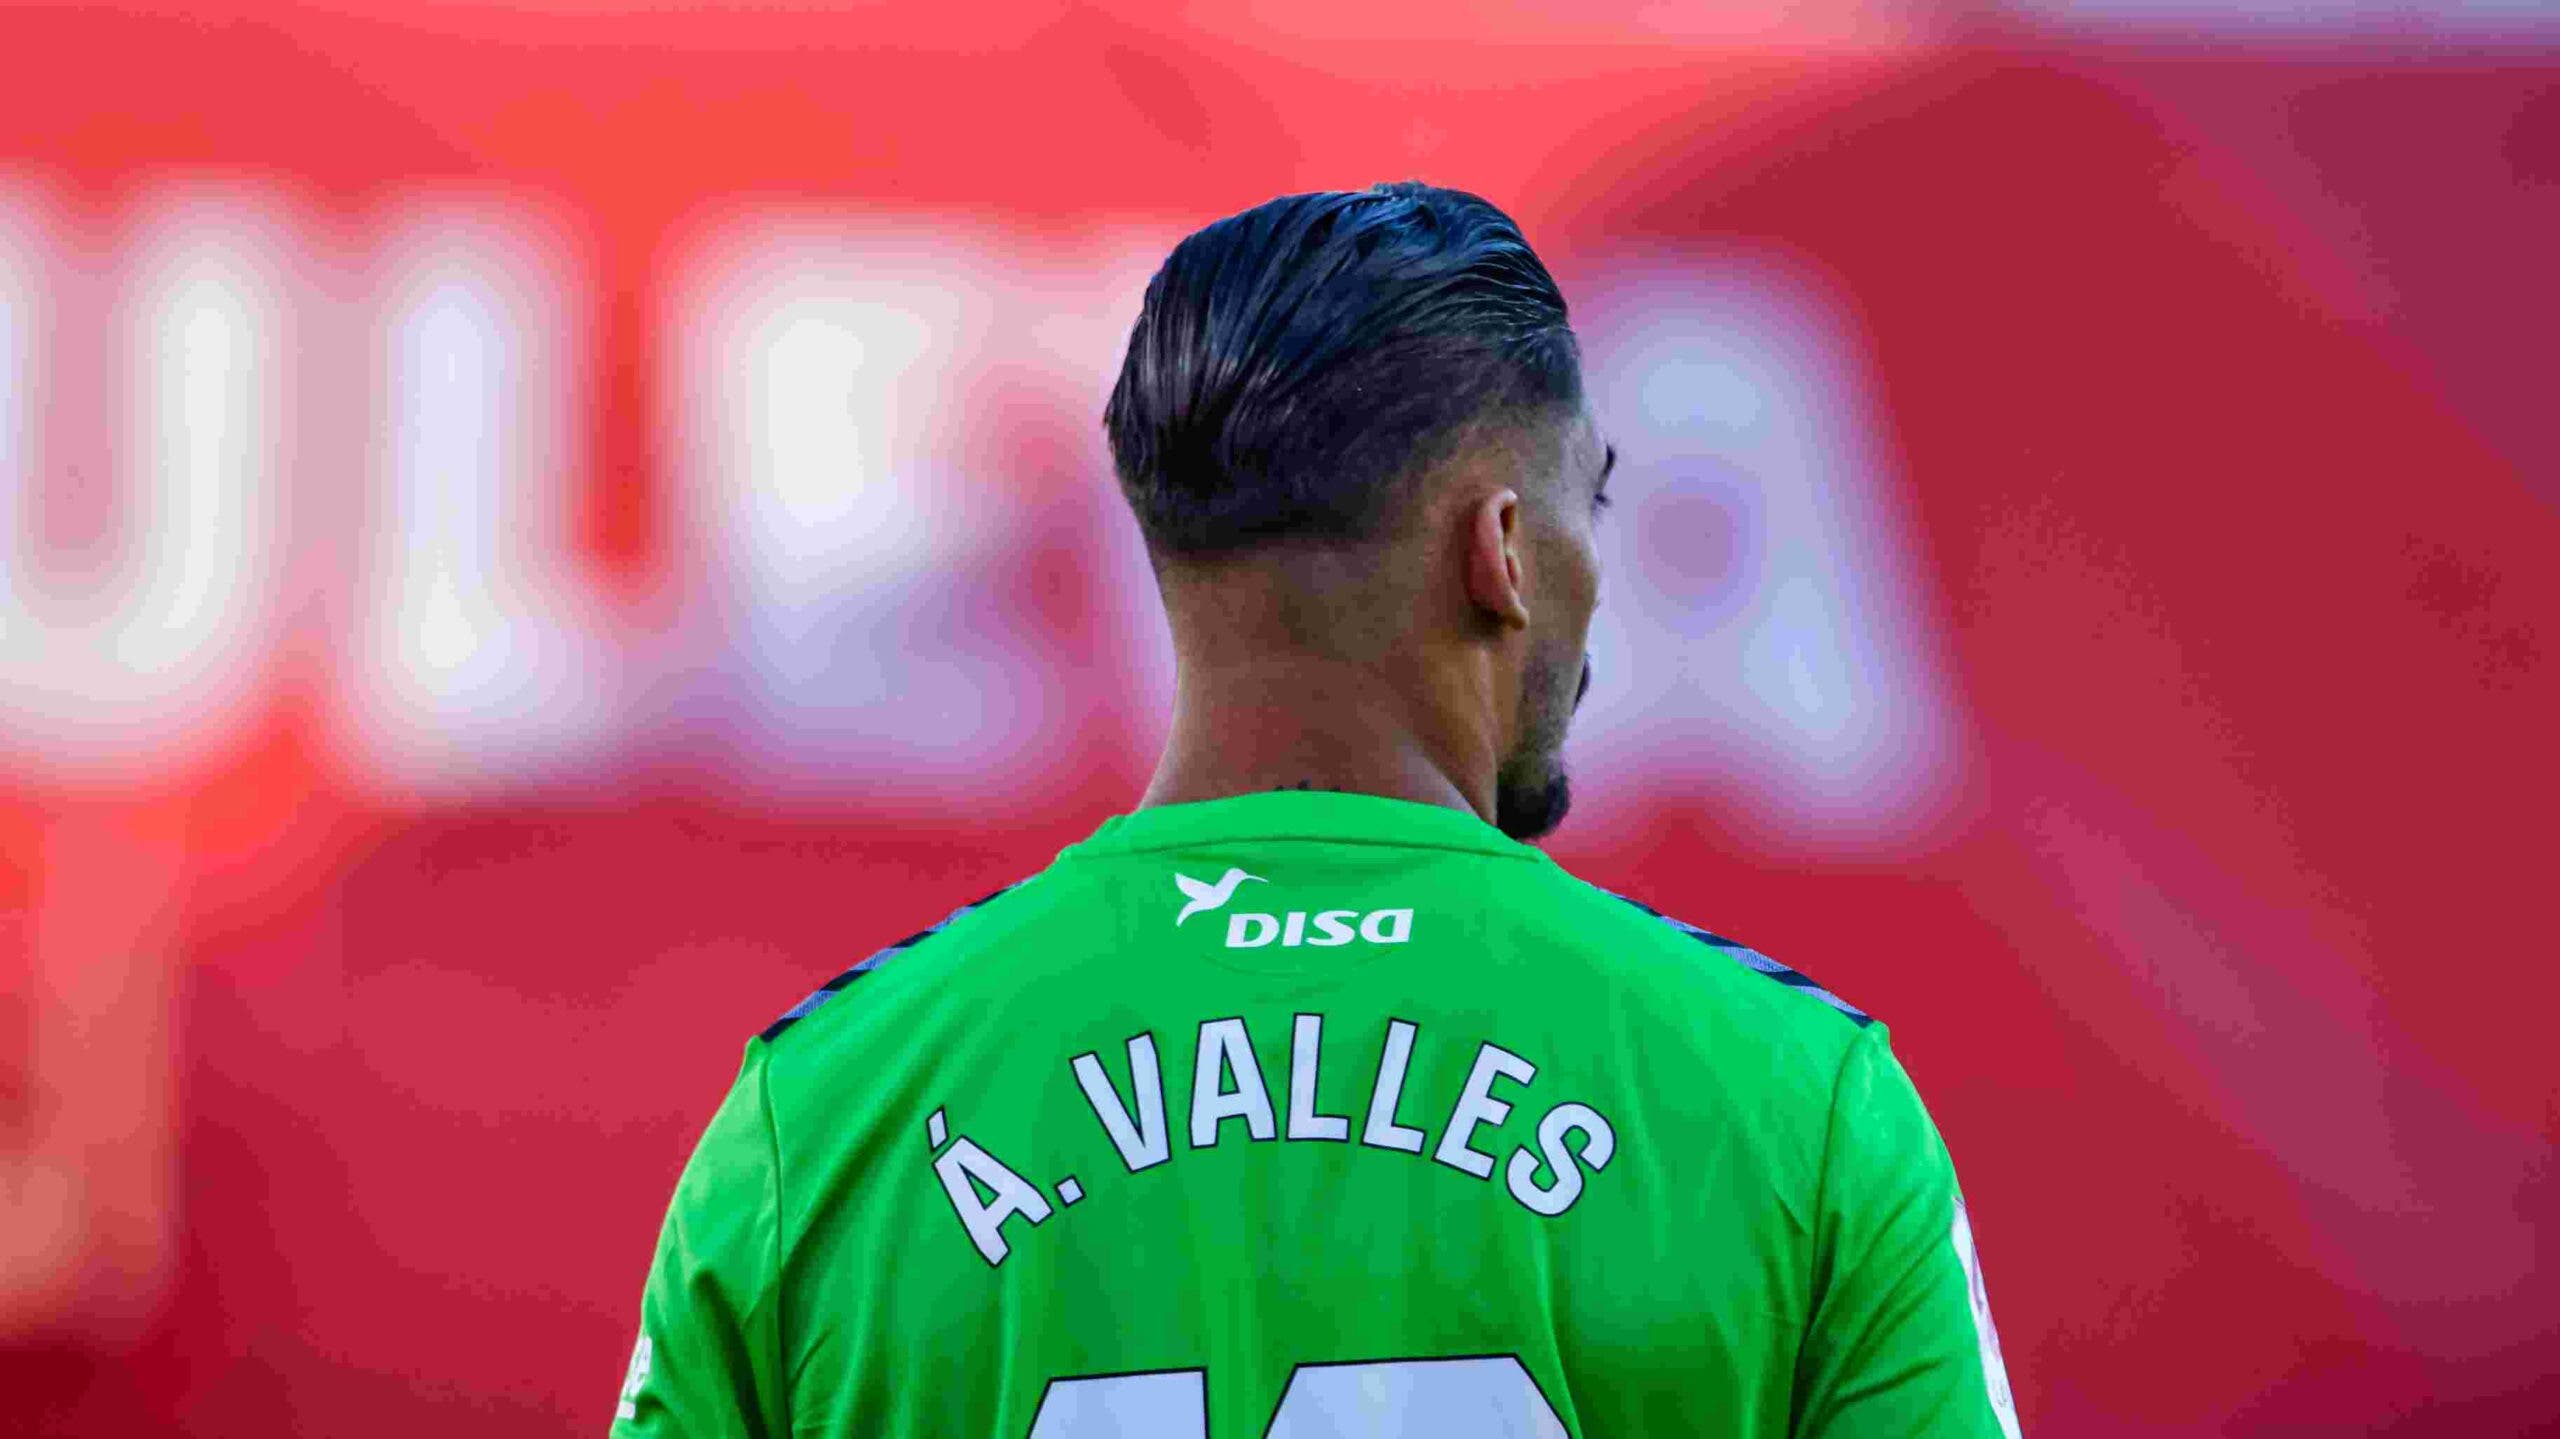 Las Palmas guarantees money if Álvaro Valles decides to leave
	

